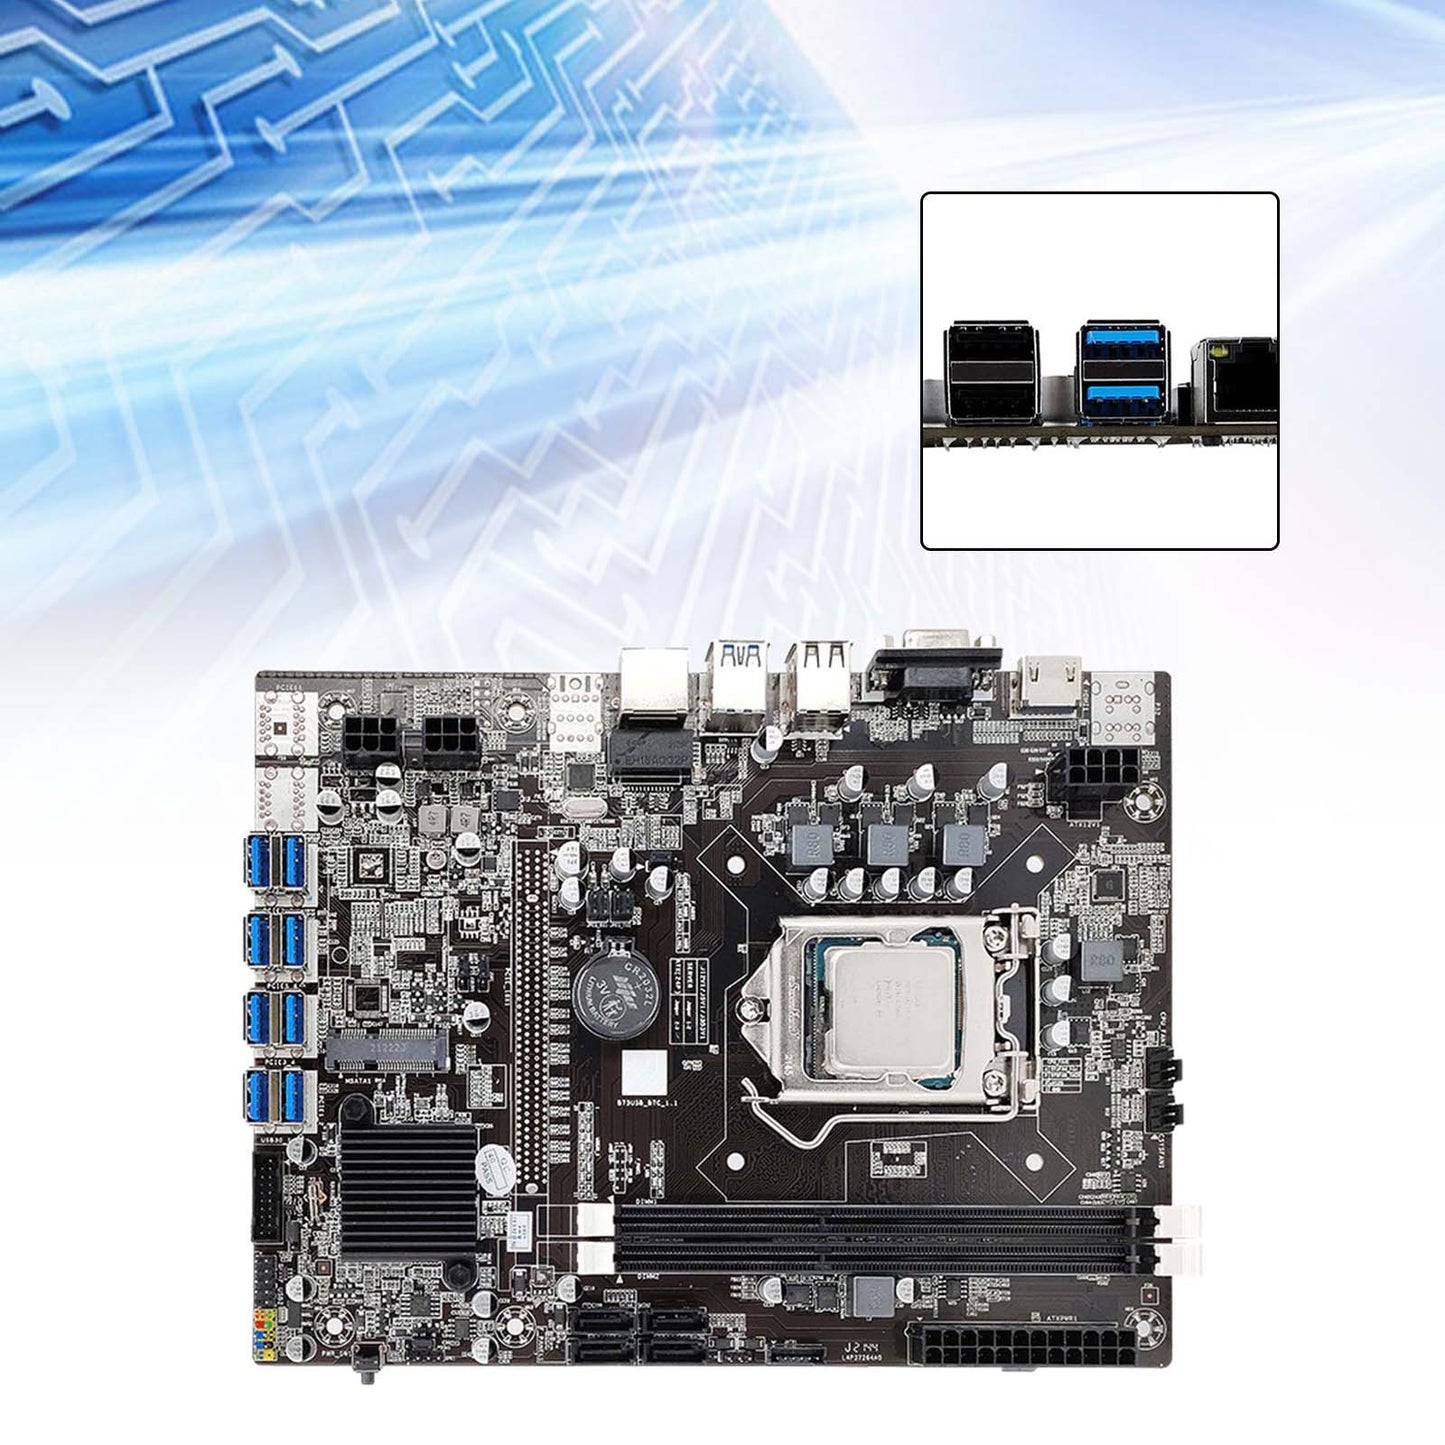 B250C-BTC PCI Express DDR4 Computer Mining Motherboard for LGA1151 Gen6/7